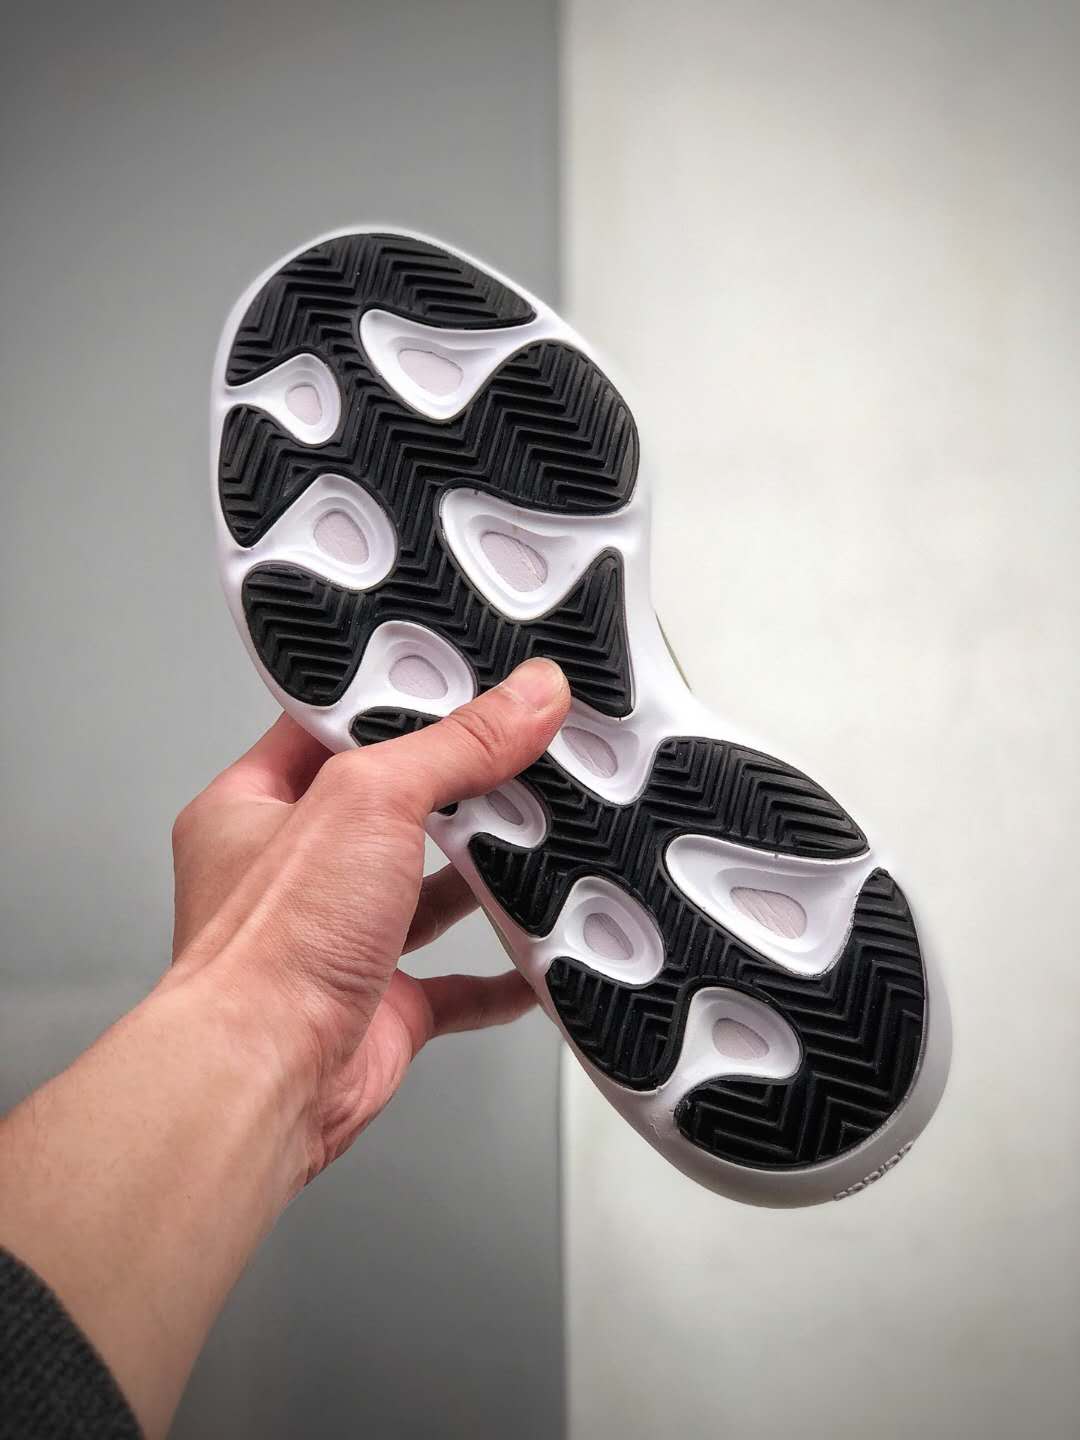 Adidas Yeezy Foam Runner Boost 700 V3 EF9899 - Stylish and Comfortable Footwear